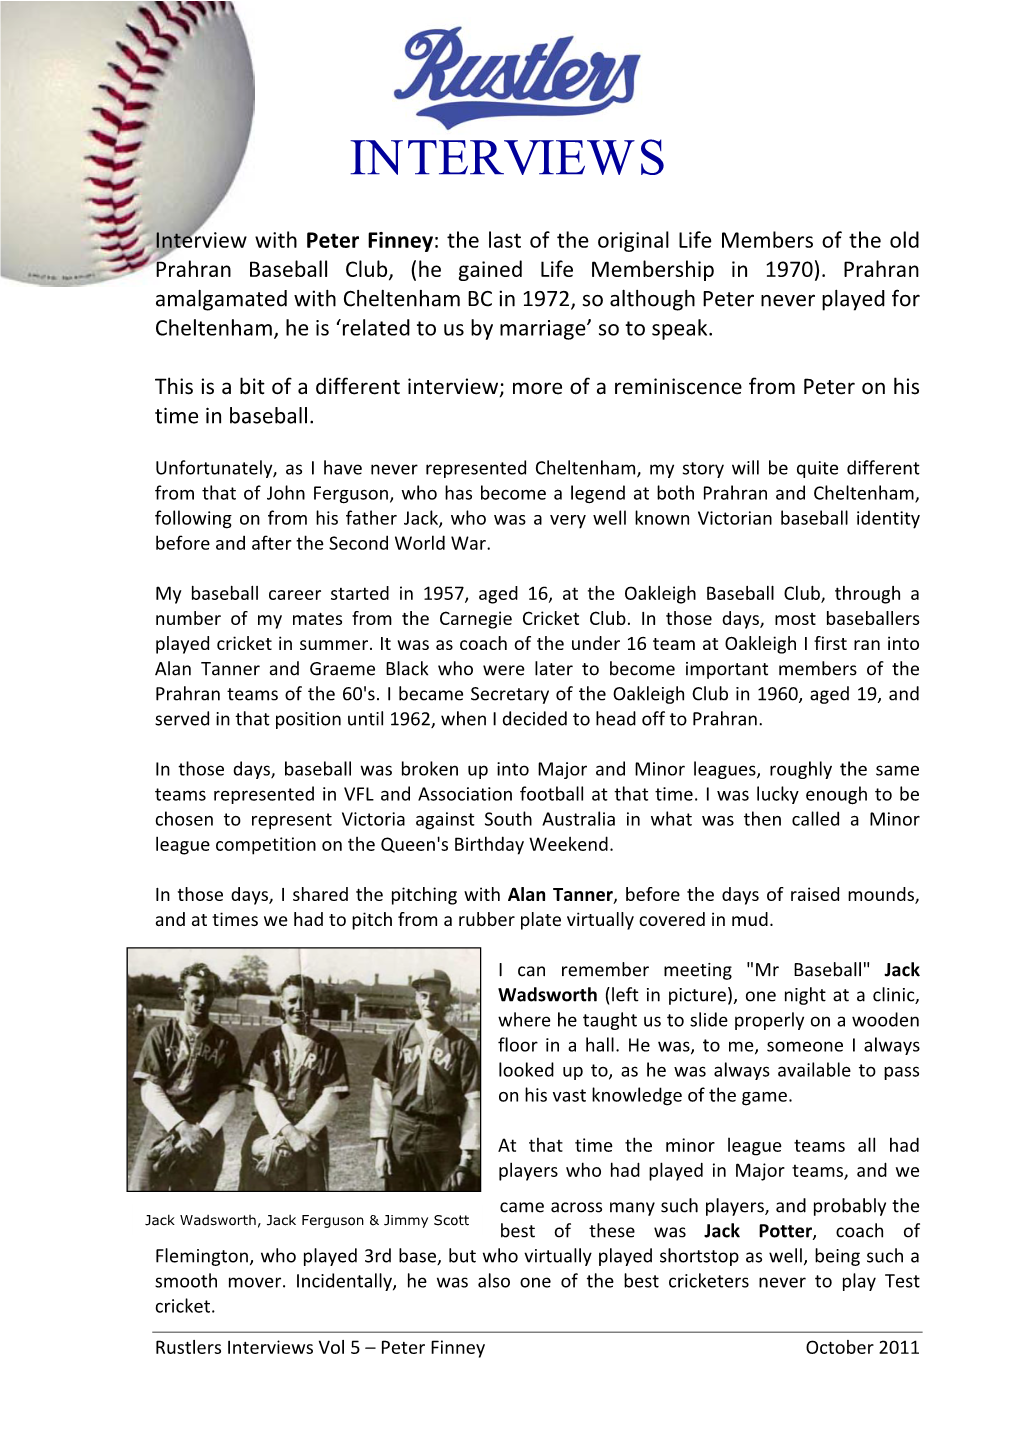 Peter Finney: the Last of the Original Life Members of the Old Prahran Baseball Club, (He Gained Life Membership in 1970)